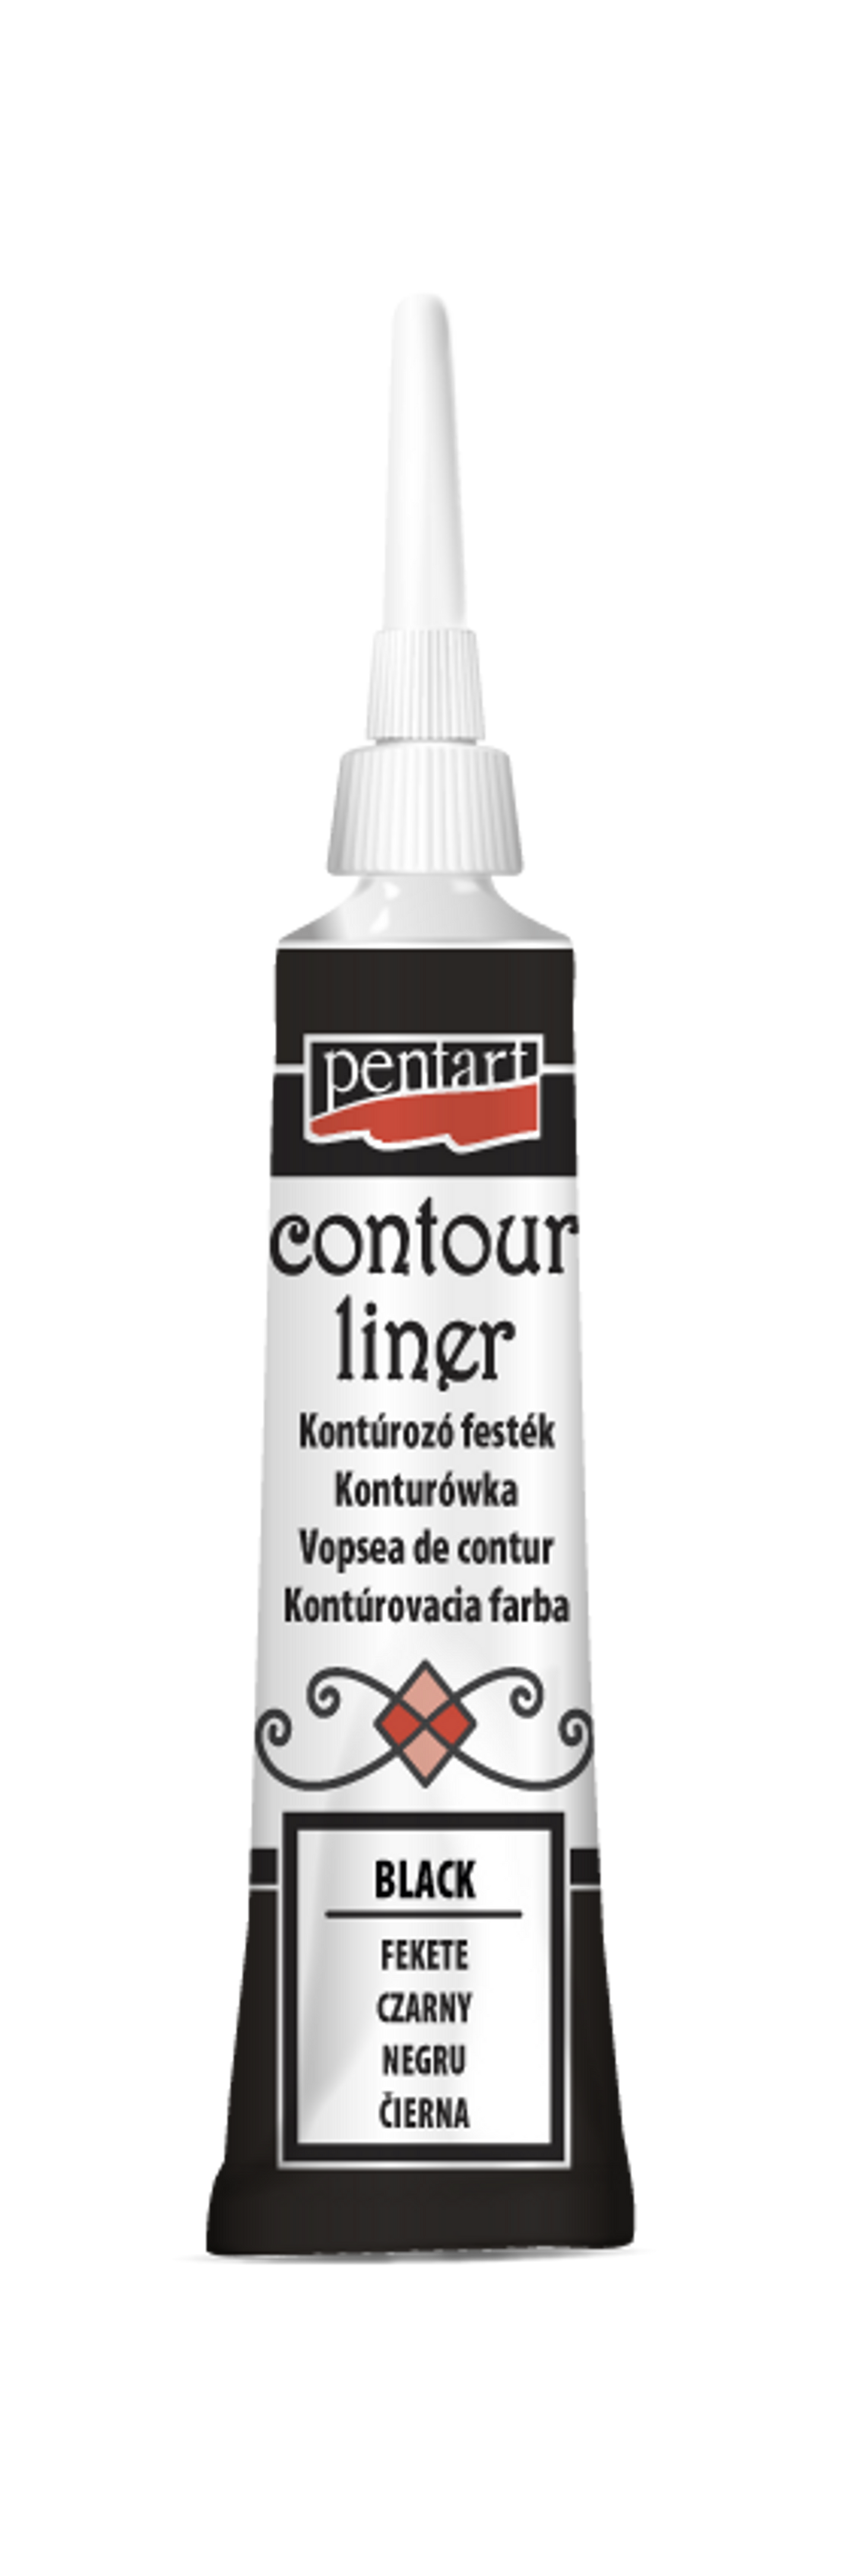 Pentart contour liner Pens 30 ml